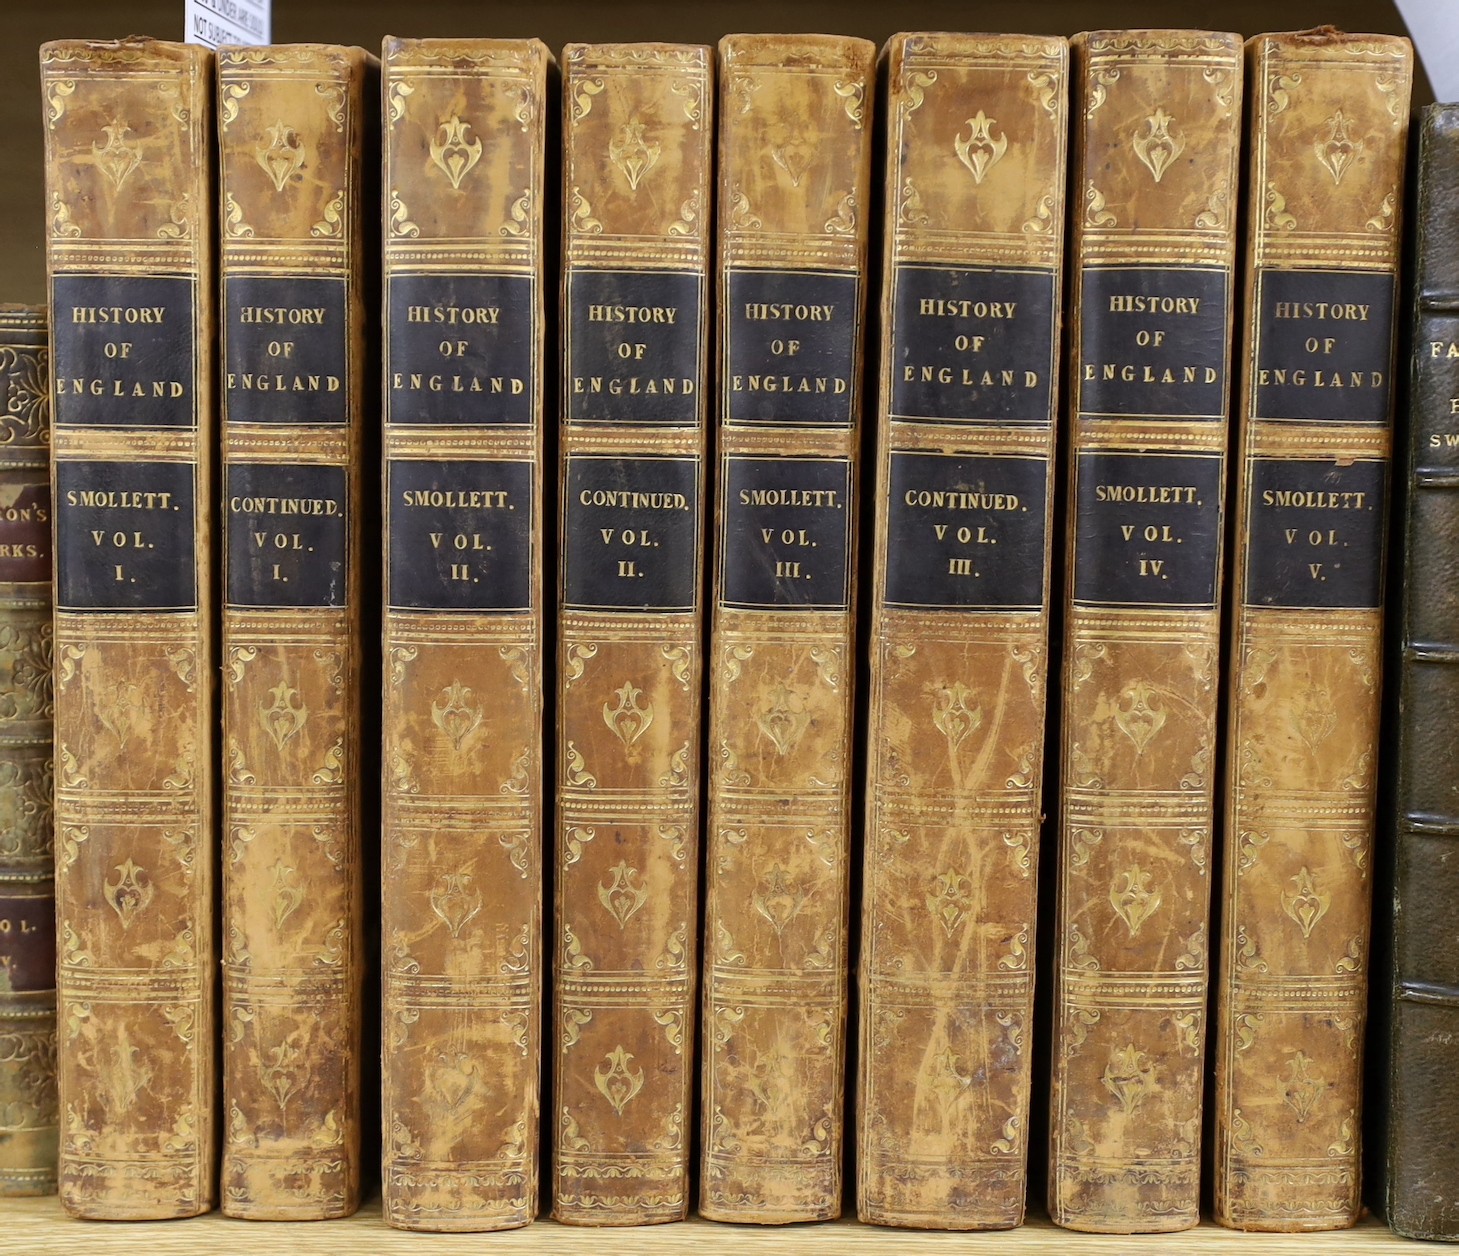 Smollett, Tobias - The History of England, 5 vols (in 8), 8vo, half calf, London, 1822